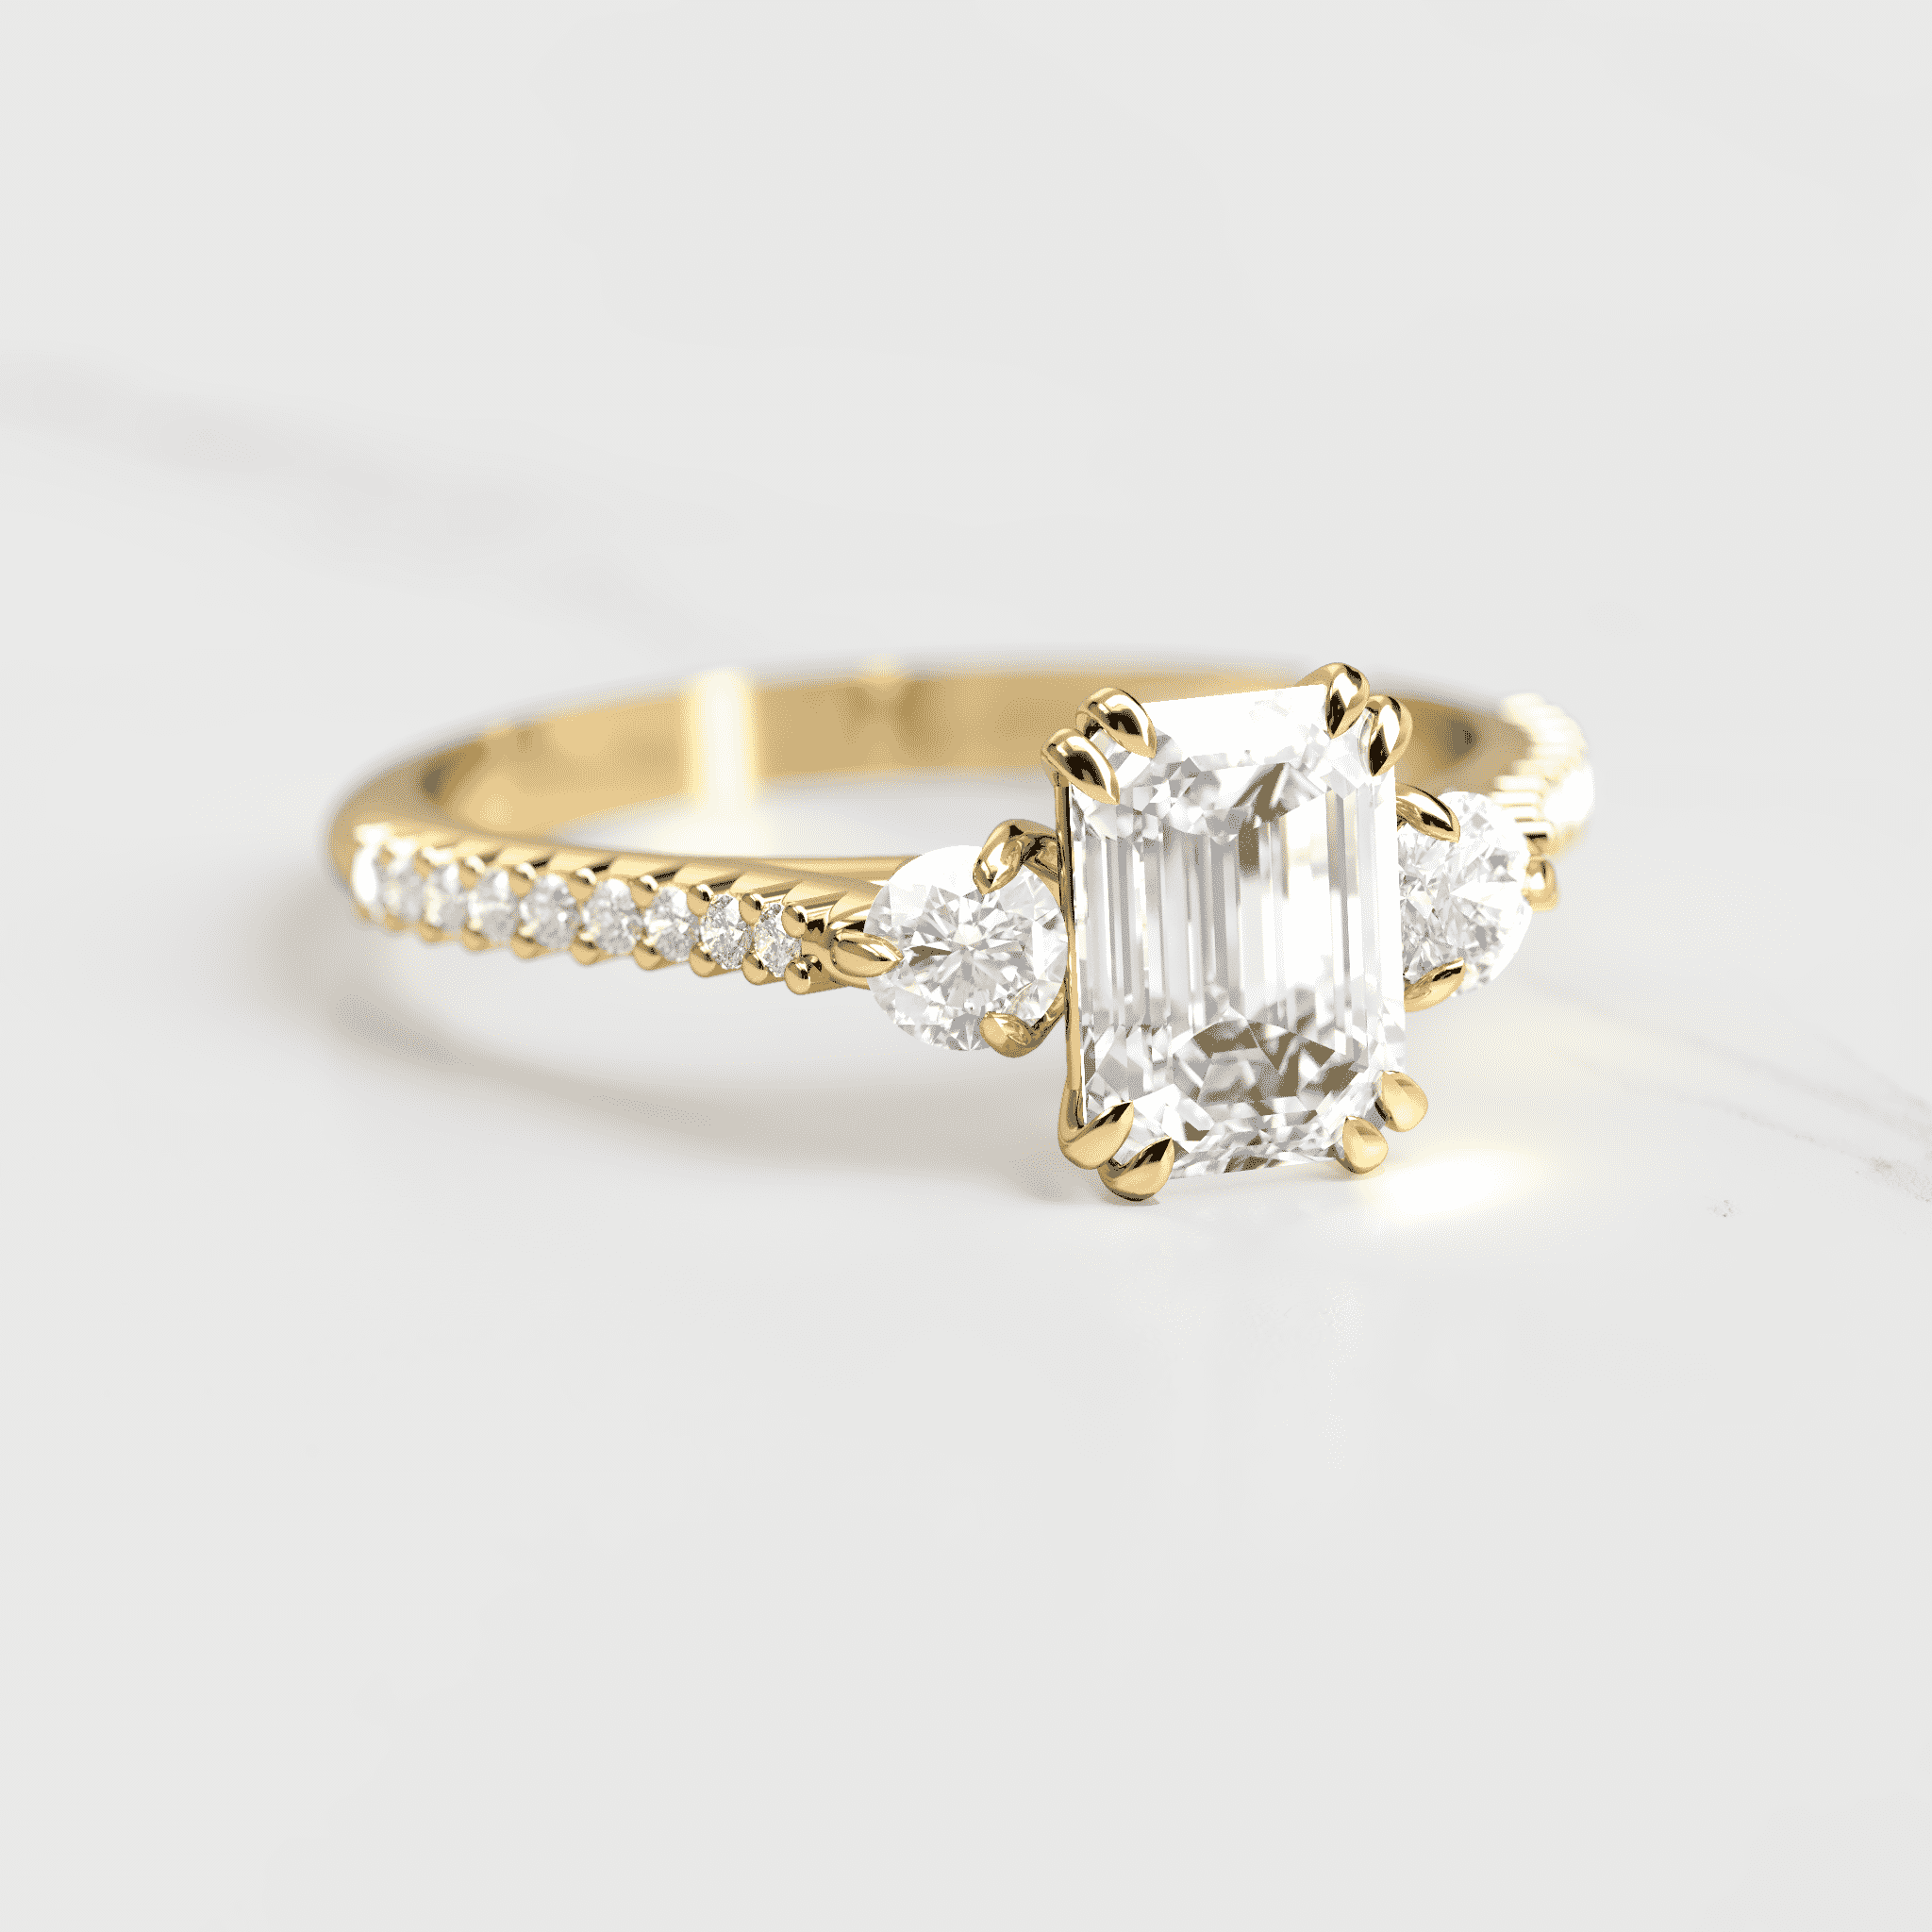 EMERALD HALF PAVE DIAMOND RING WITH ACCENT STONES - 18k white gold / 0.3ct / lab diamond